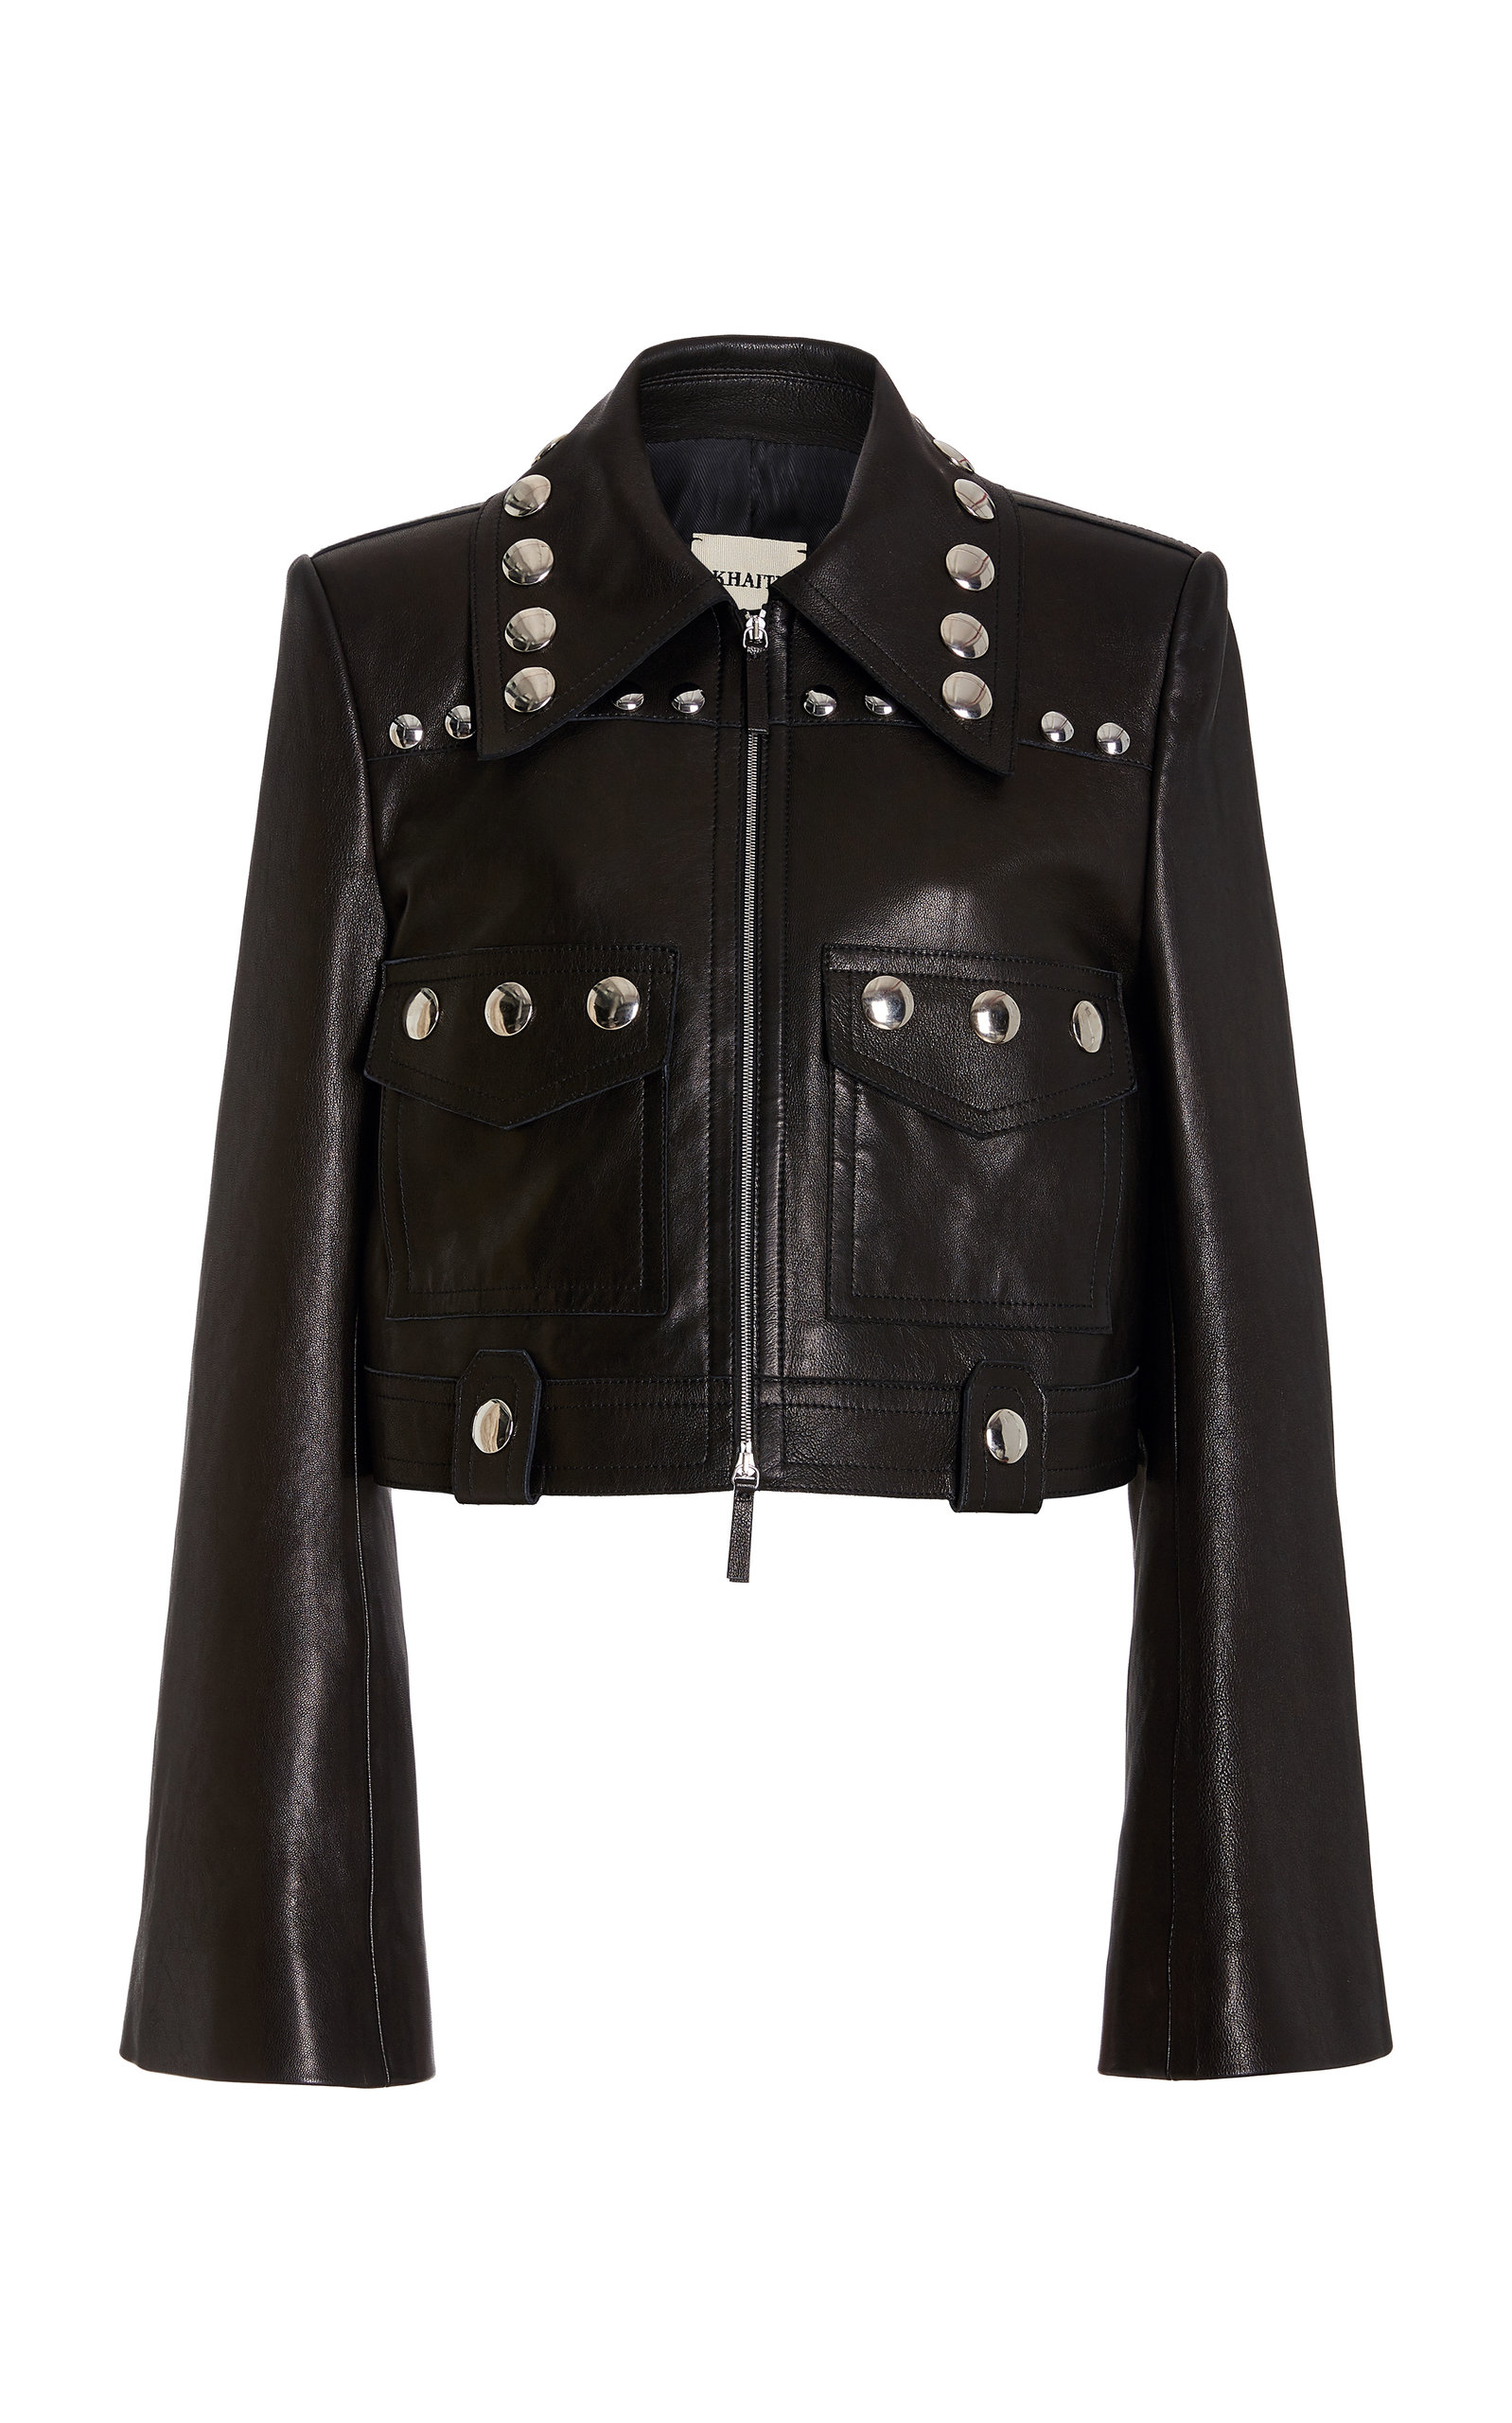 Khaite Women's Lyle Studded Leather Cropped Biker Jacket